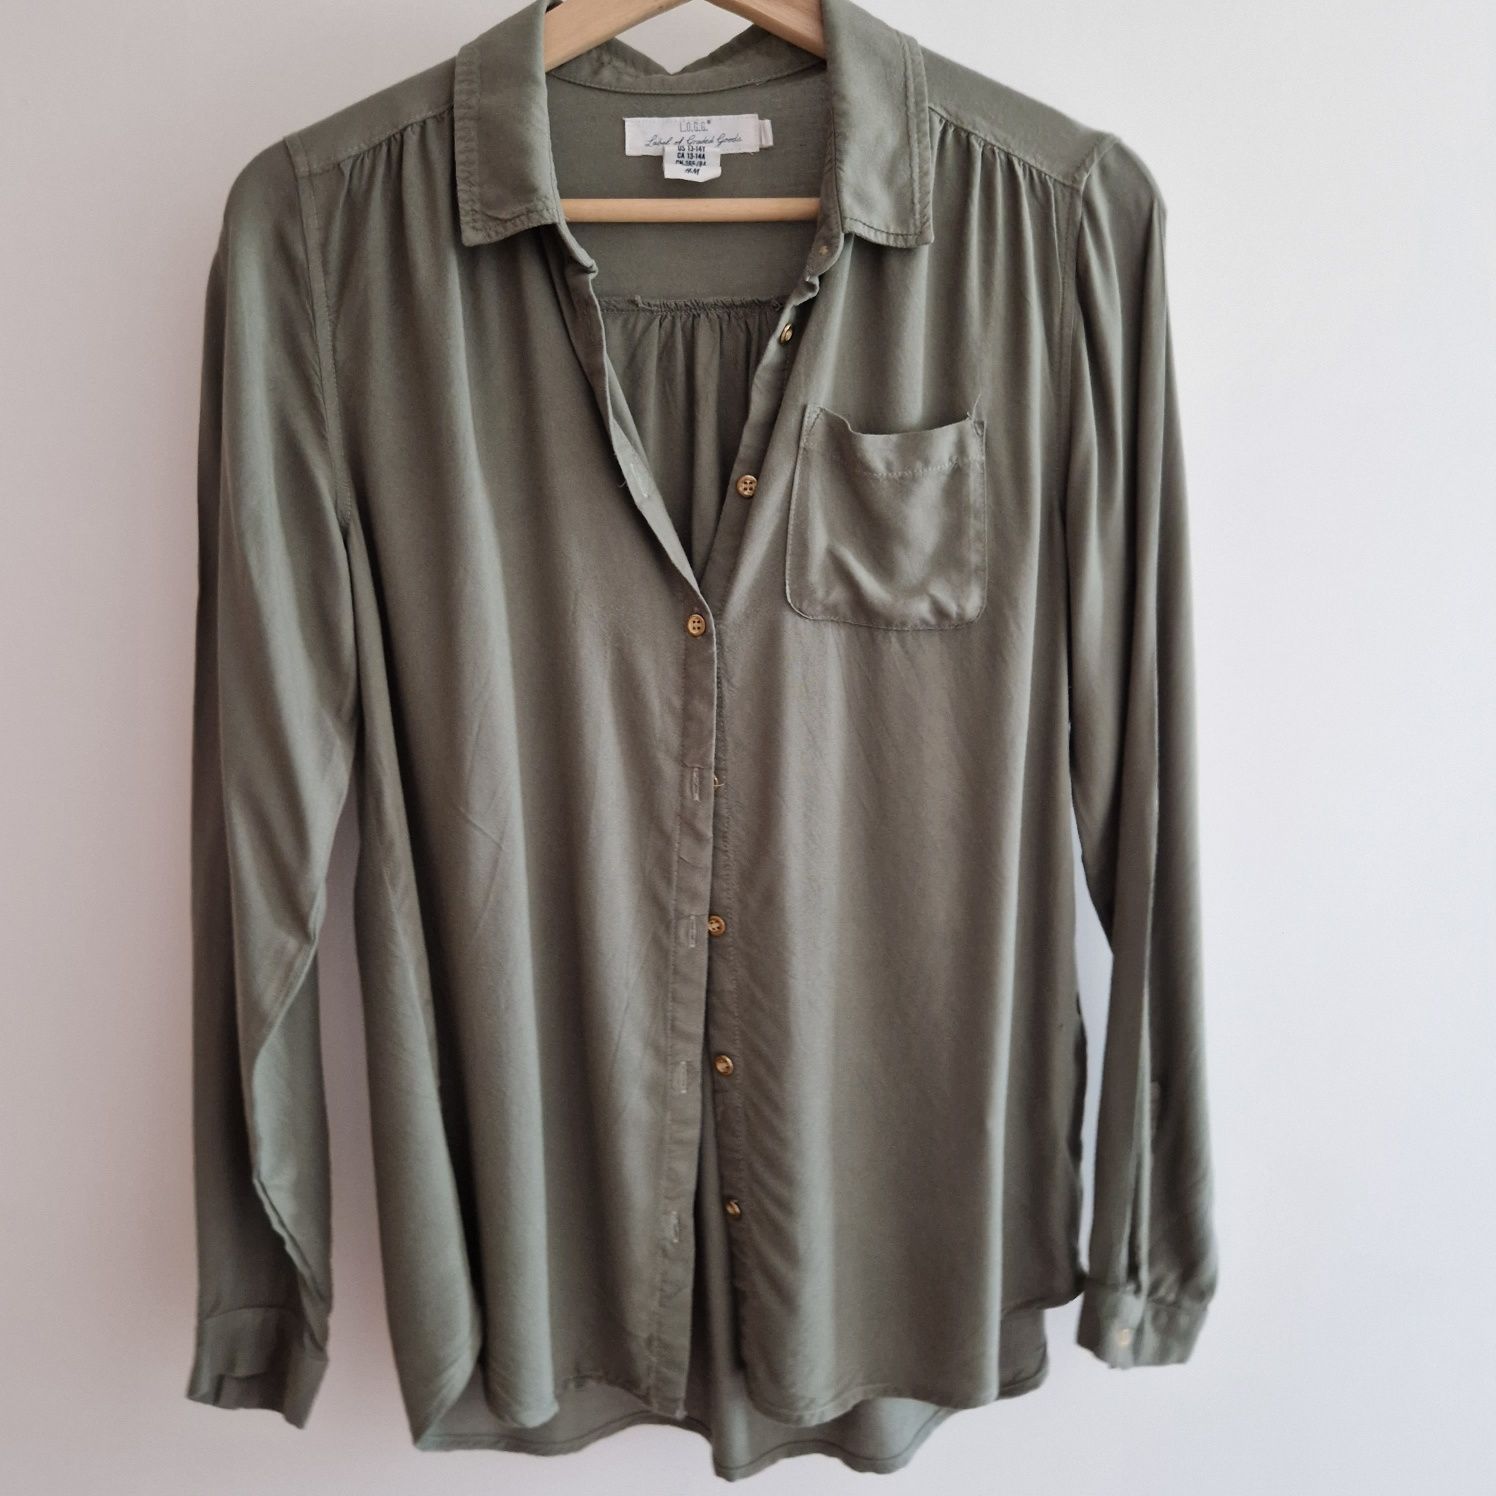 Camisa Blusa Verde Tropa H&M
Verde tropa, verde seco, caqui, militar
T